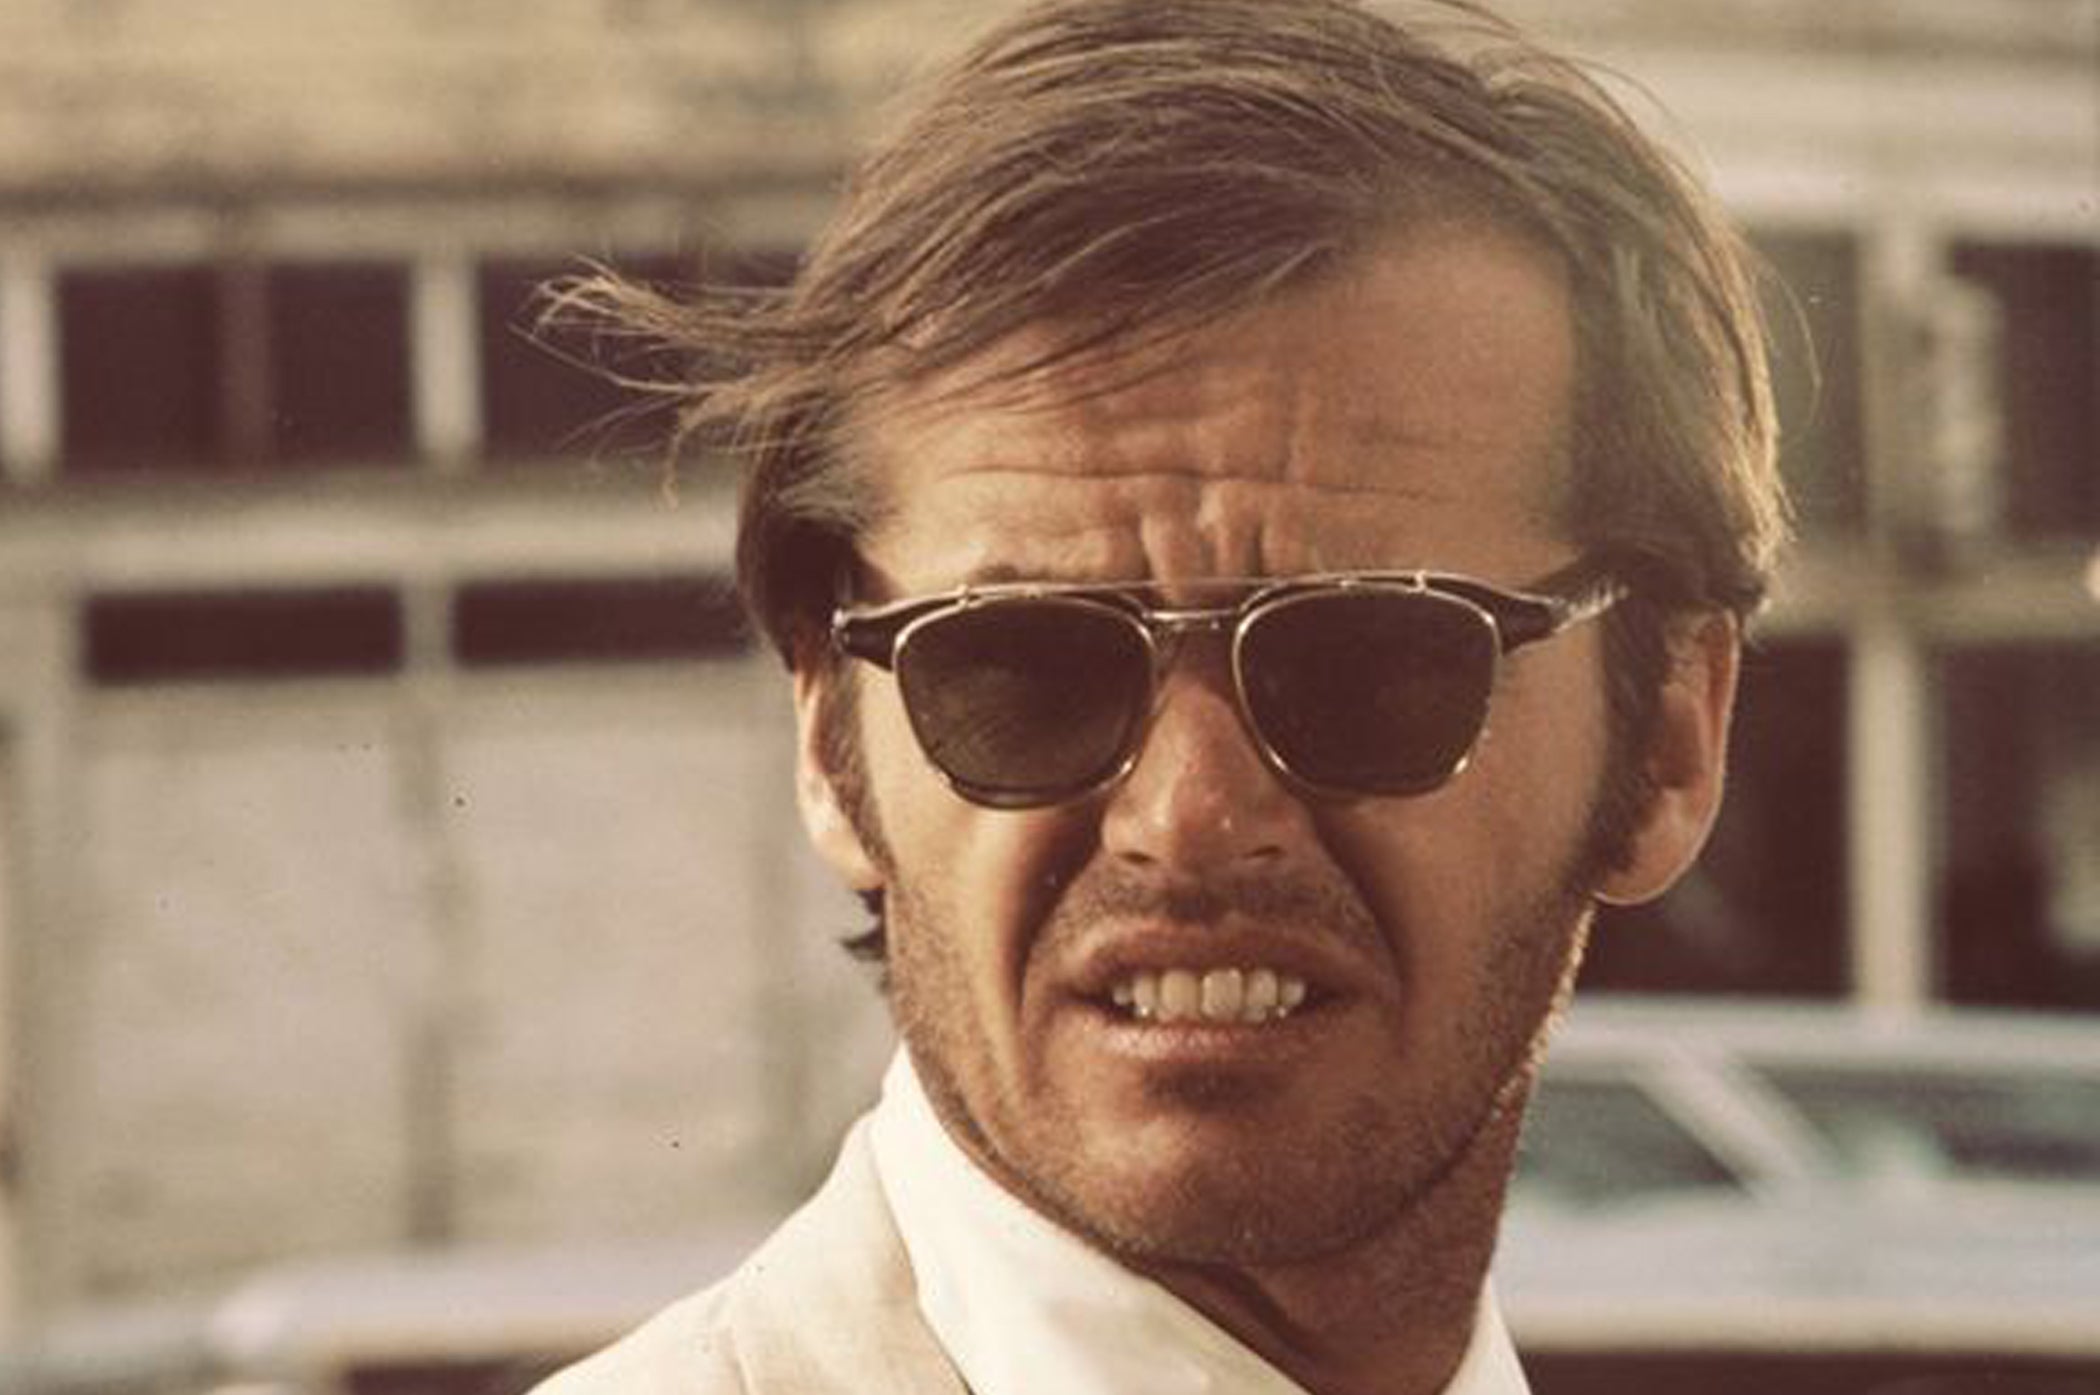 Sunglass Jack Jack Nicholson